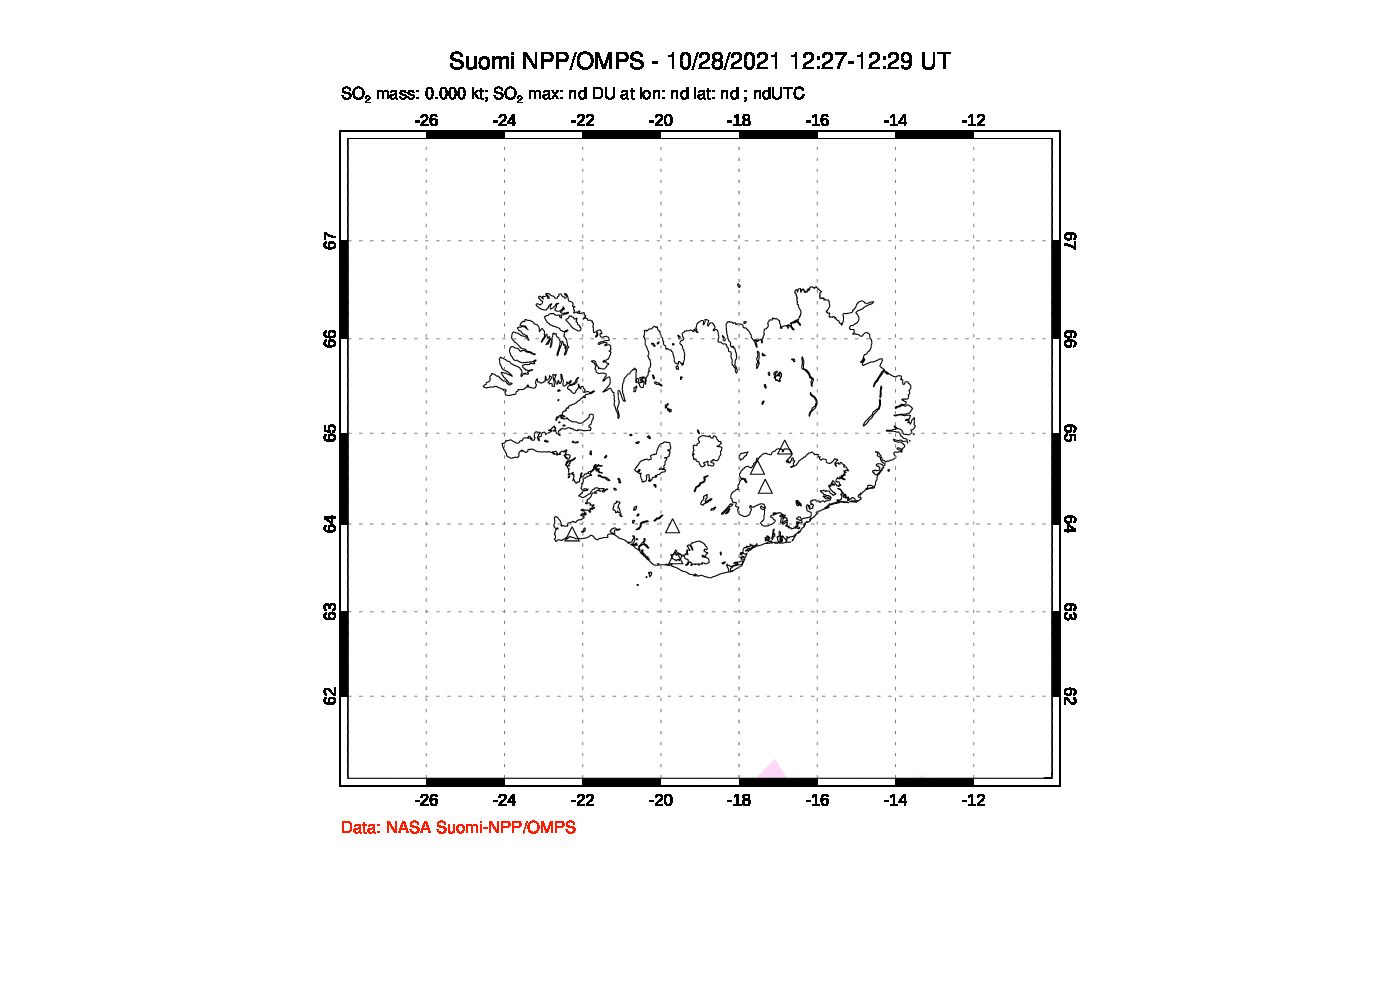 A sulfur dioxide image over Iceland on Oct 28, 2021.